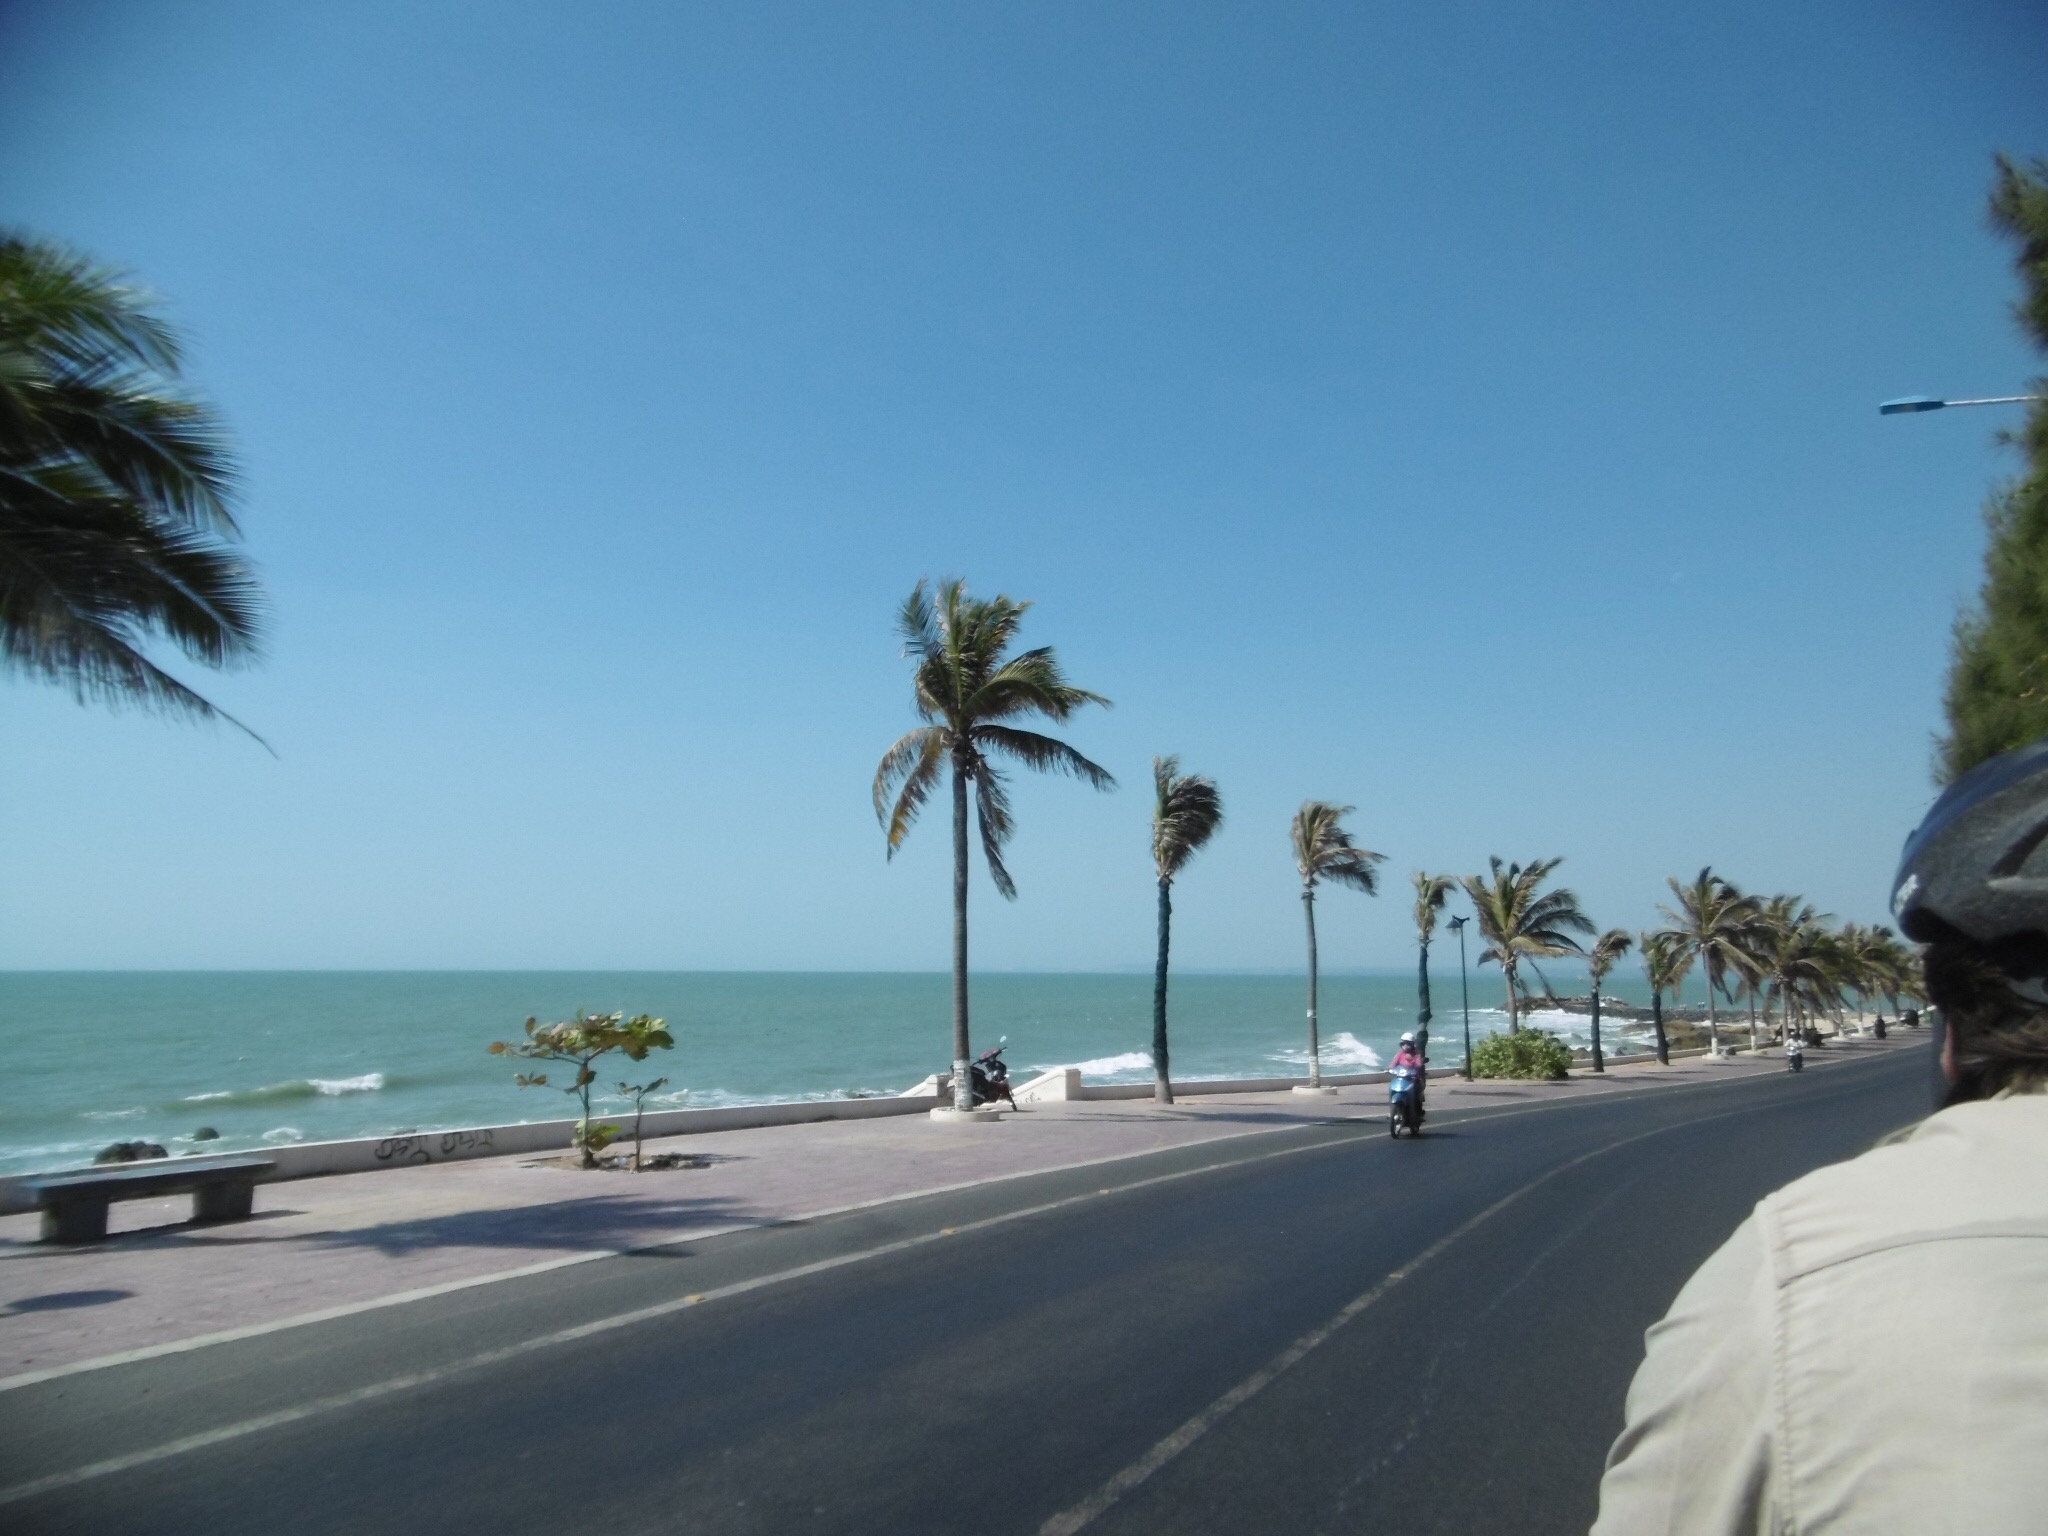 Coastal road from Mui Ne to Phan Thiet